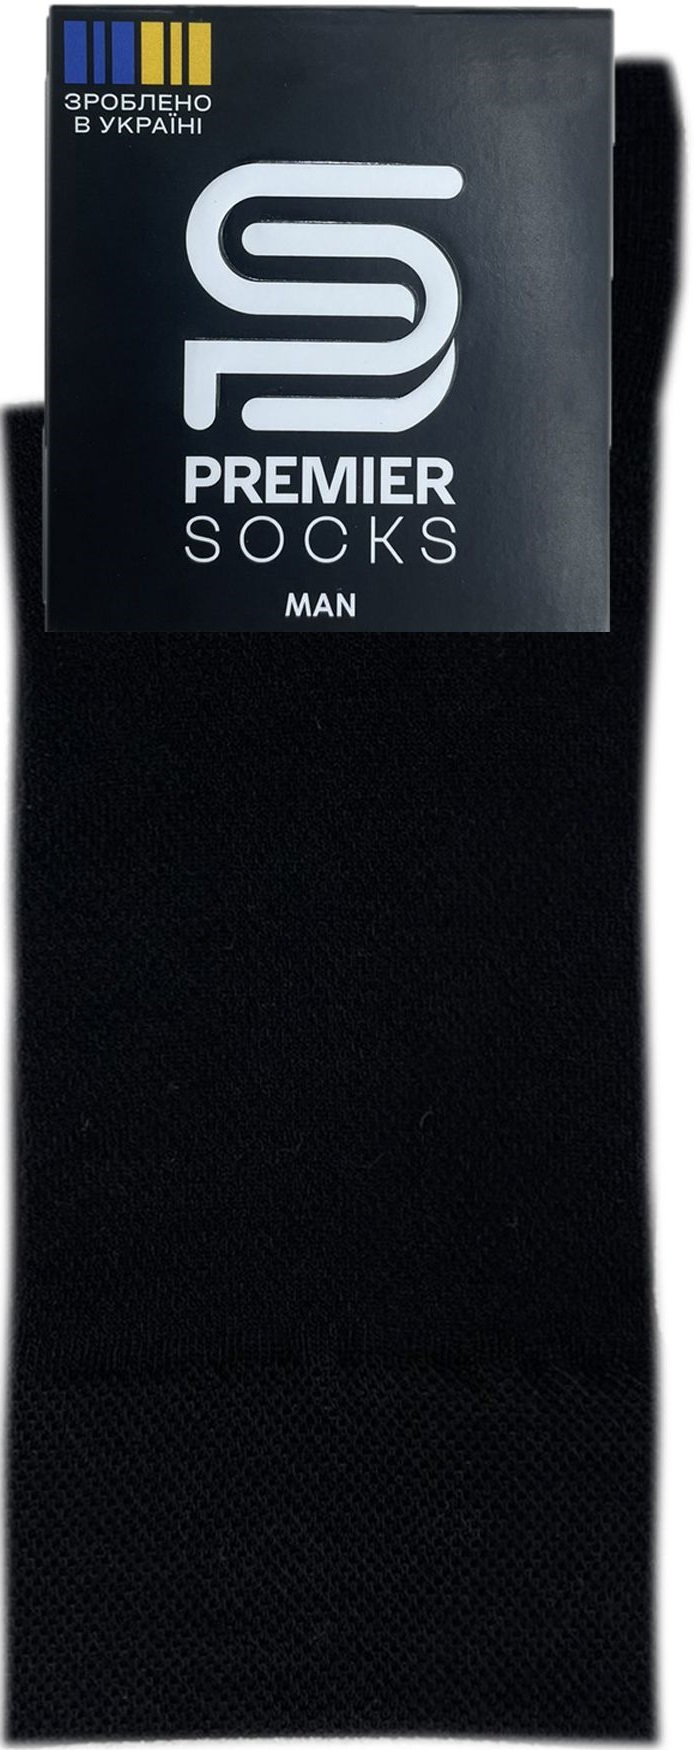 Носки мужские Premier Socks 40-41 1 пара черные (4820163317762) фото 3